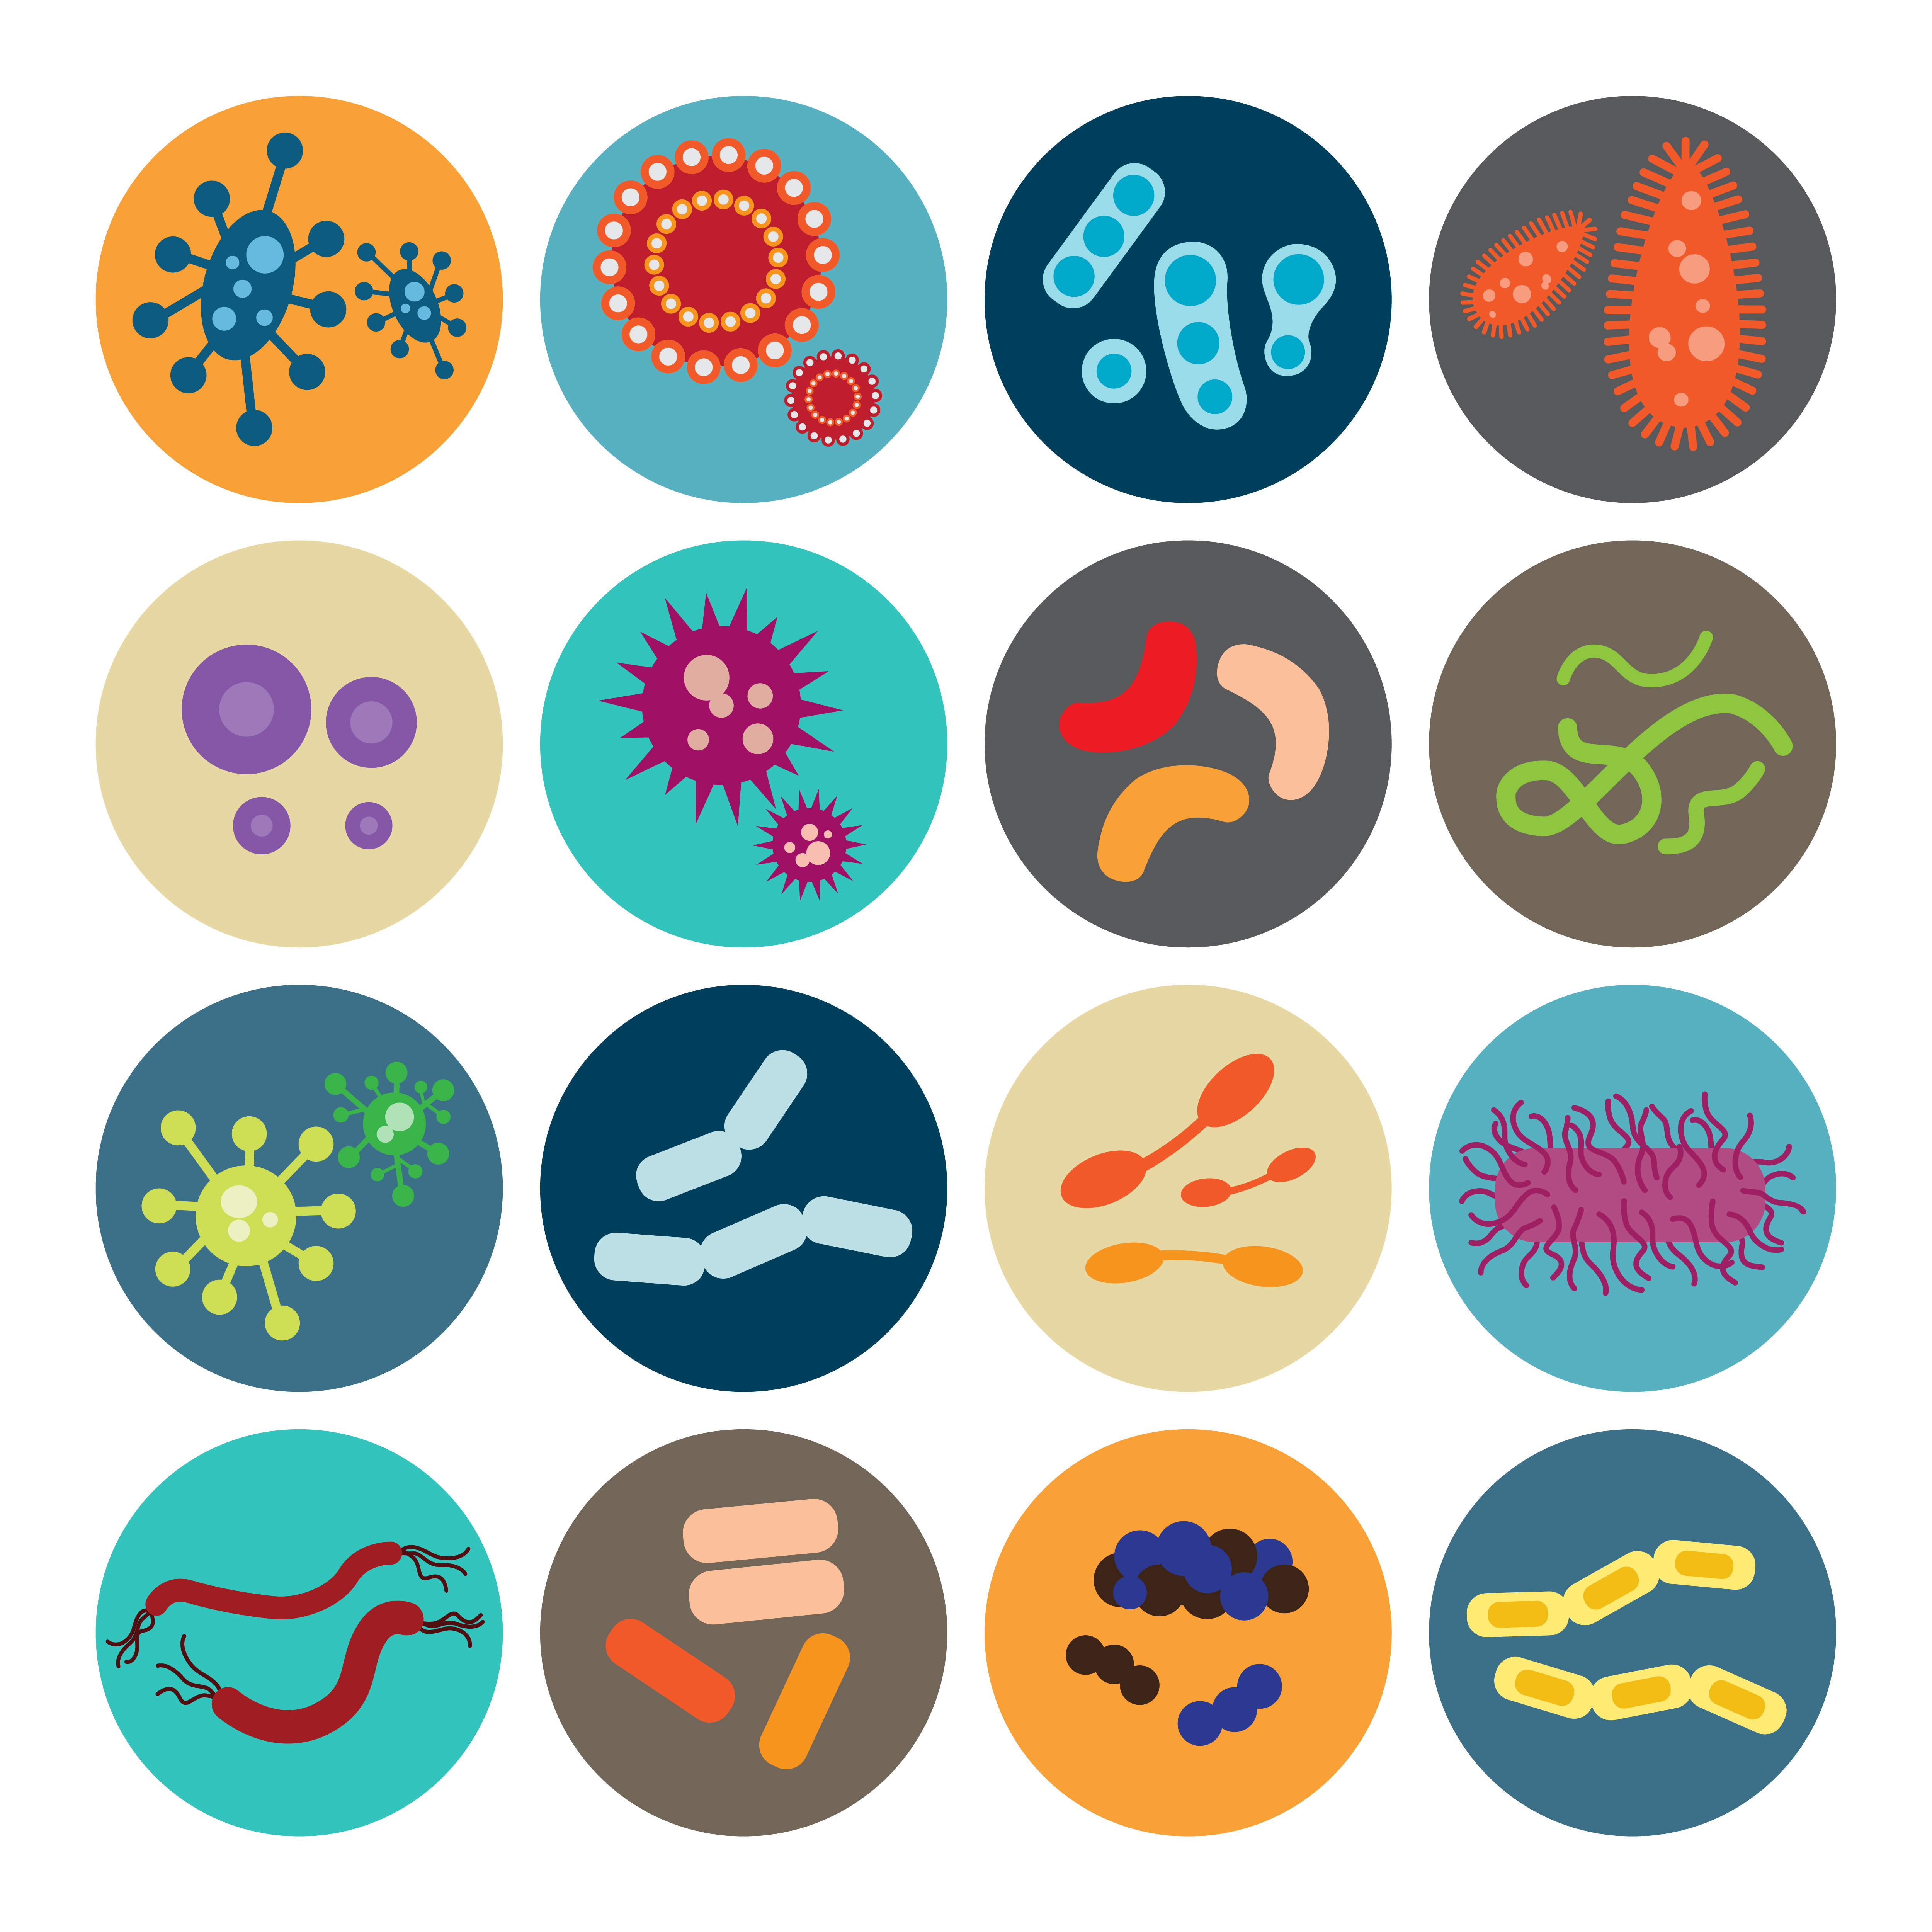 Antibiotic Resistance: An Ancient Challenge